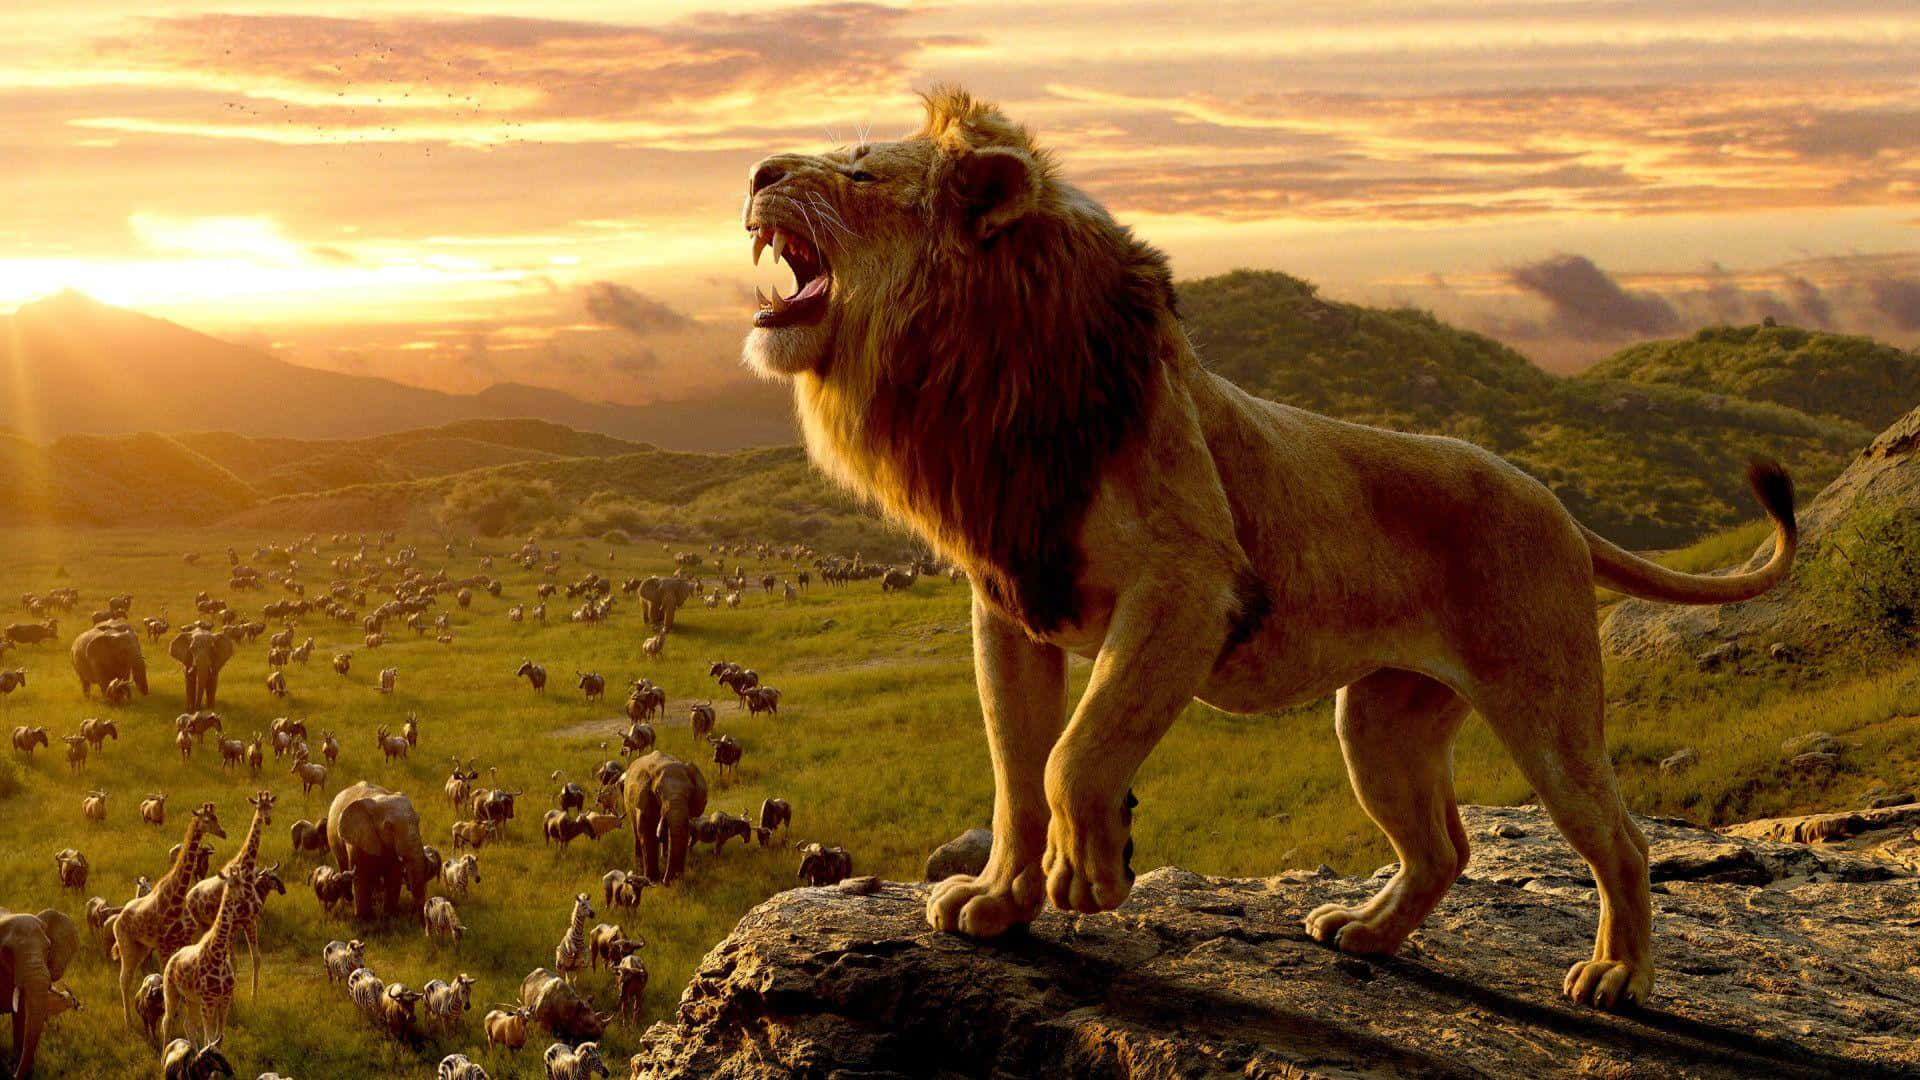 Majestic Lion Roaringat Sunset Wallpaper